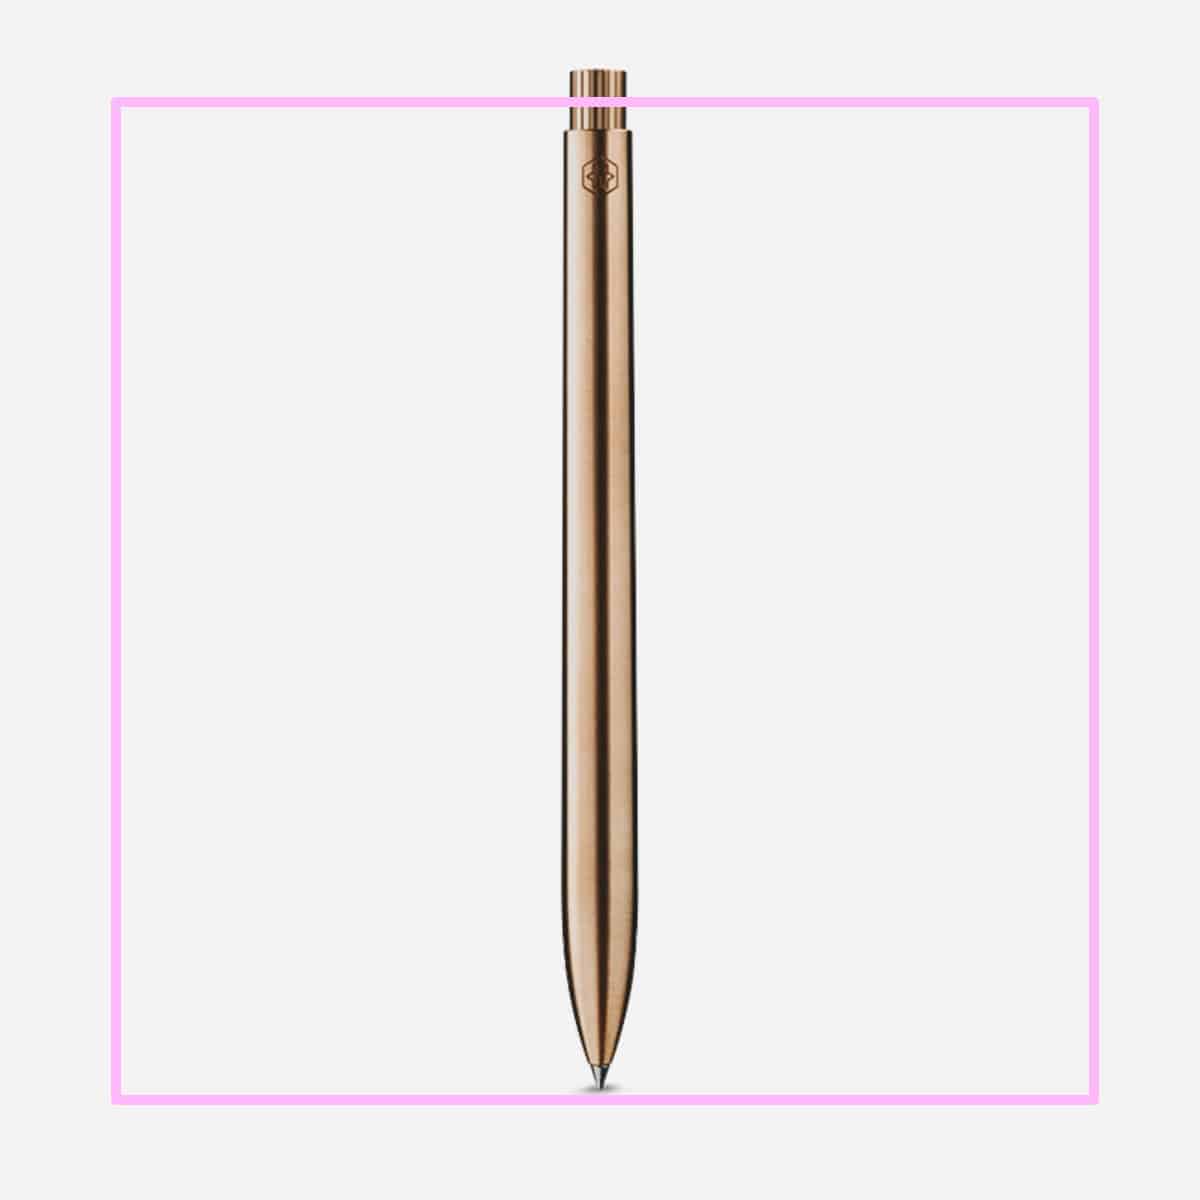 Ajoto rose gold stainless steel pink frame instagram 1 sales